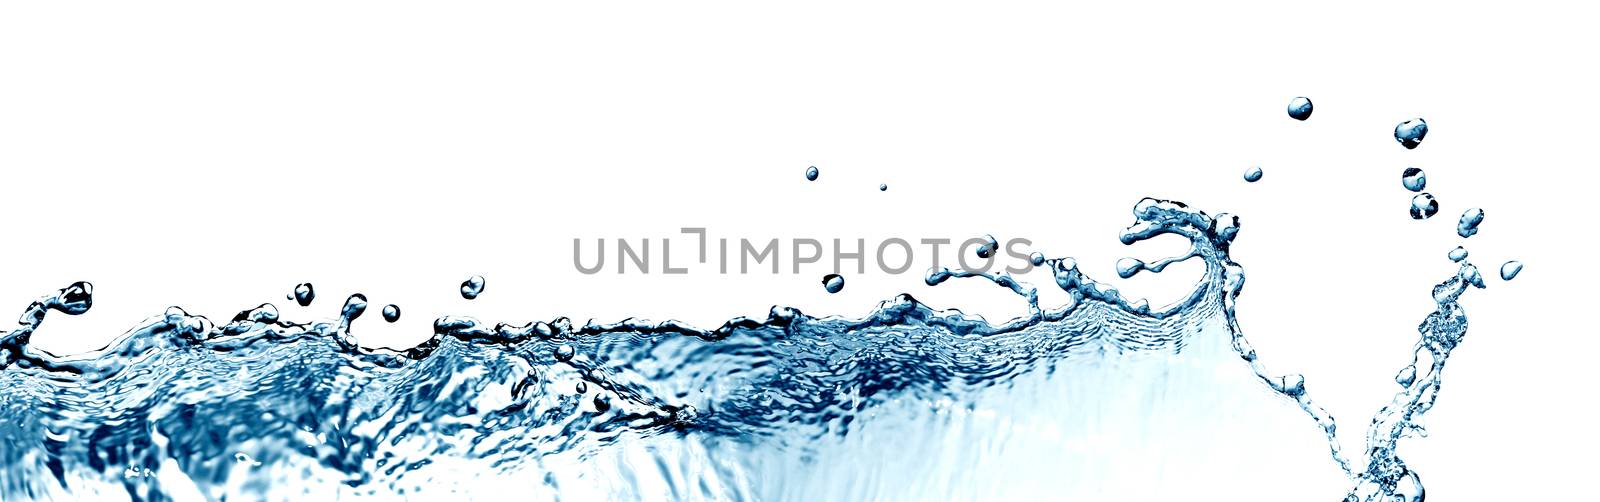 Abstract splashing water on white background